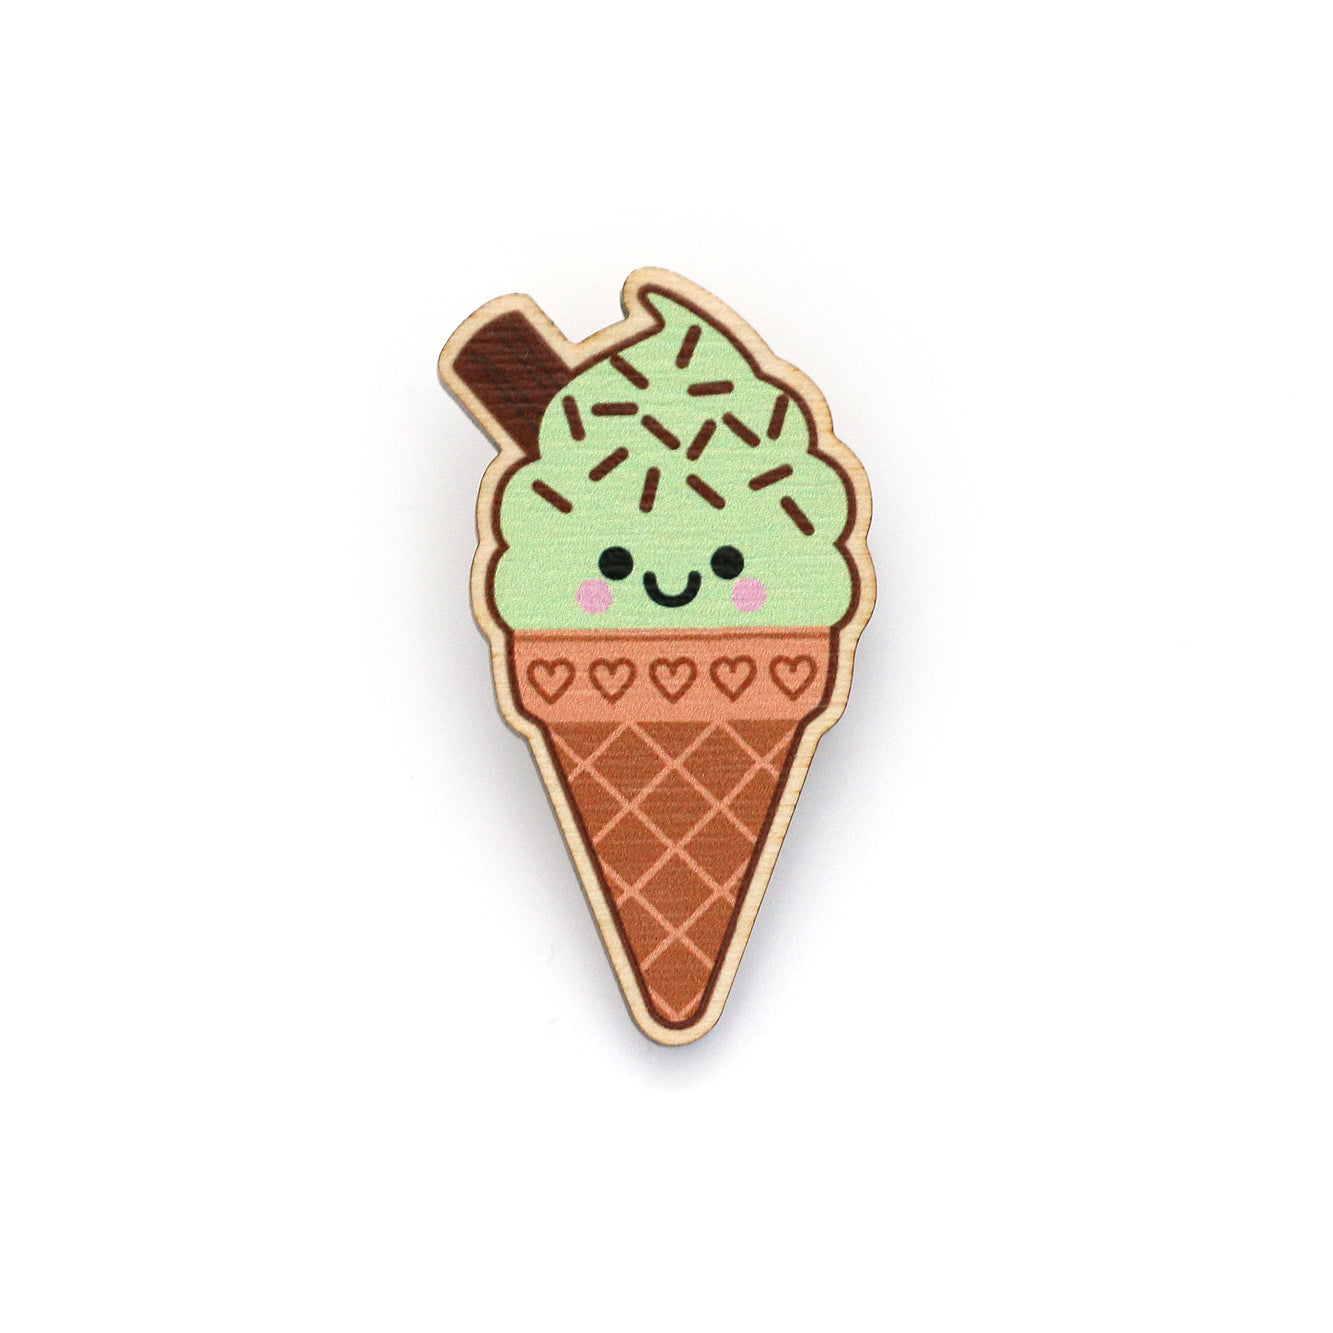 Mint Choc Chip Ice Cream Wooden Pin Badge